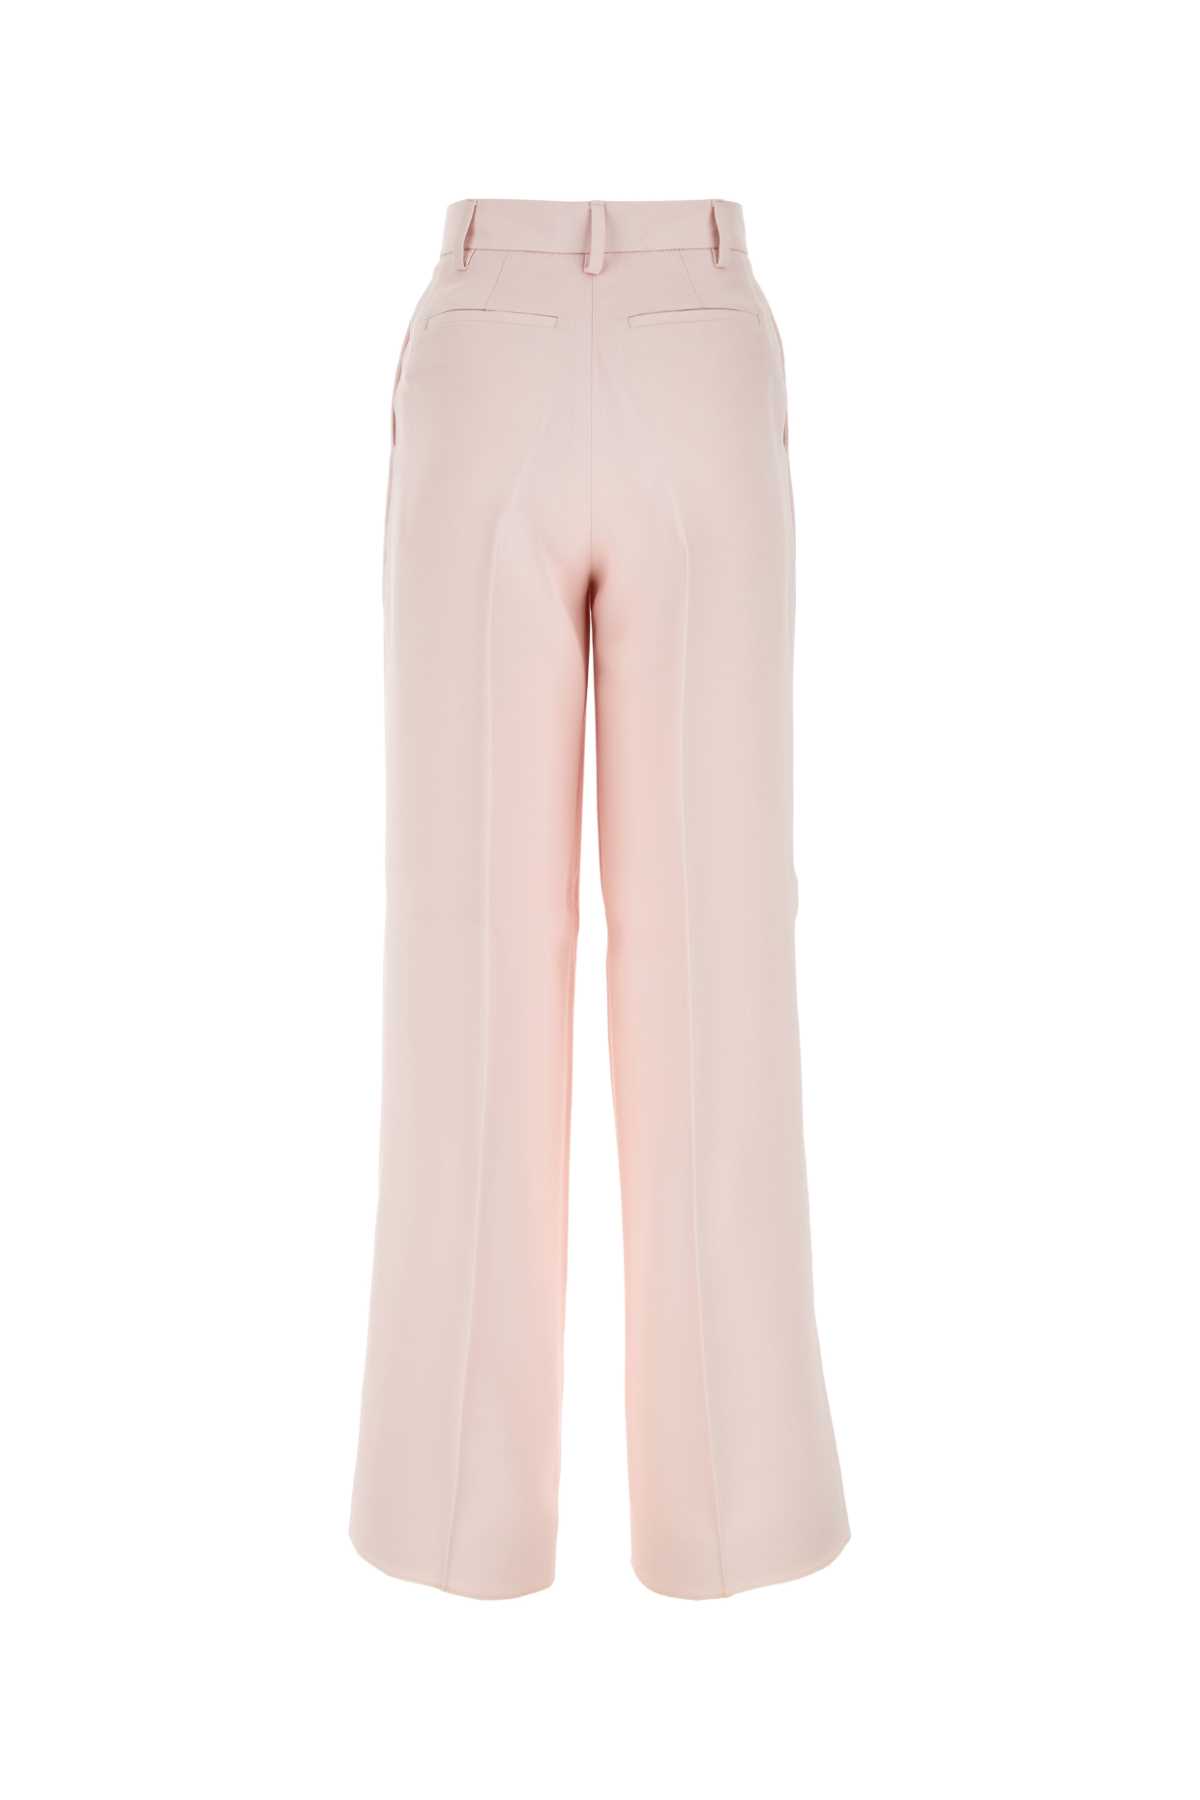 Amiri Light Pink Viscose Wide-leg Pant